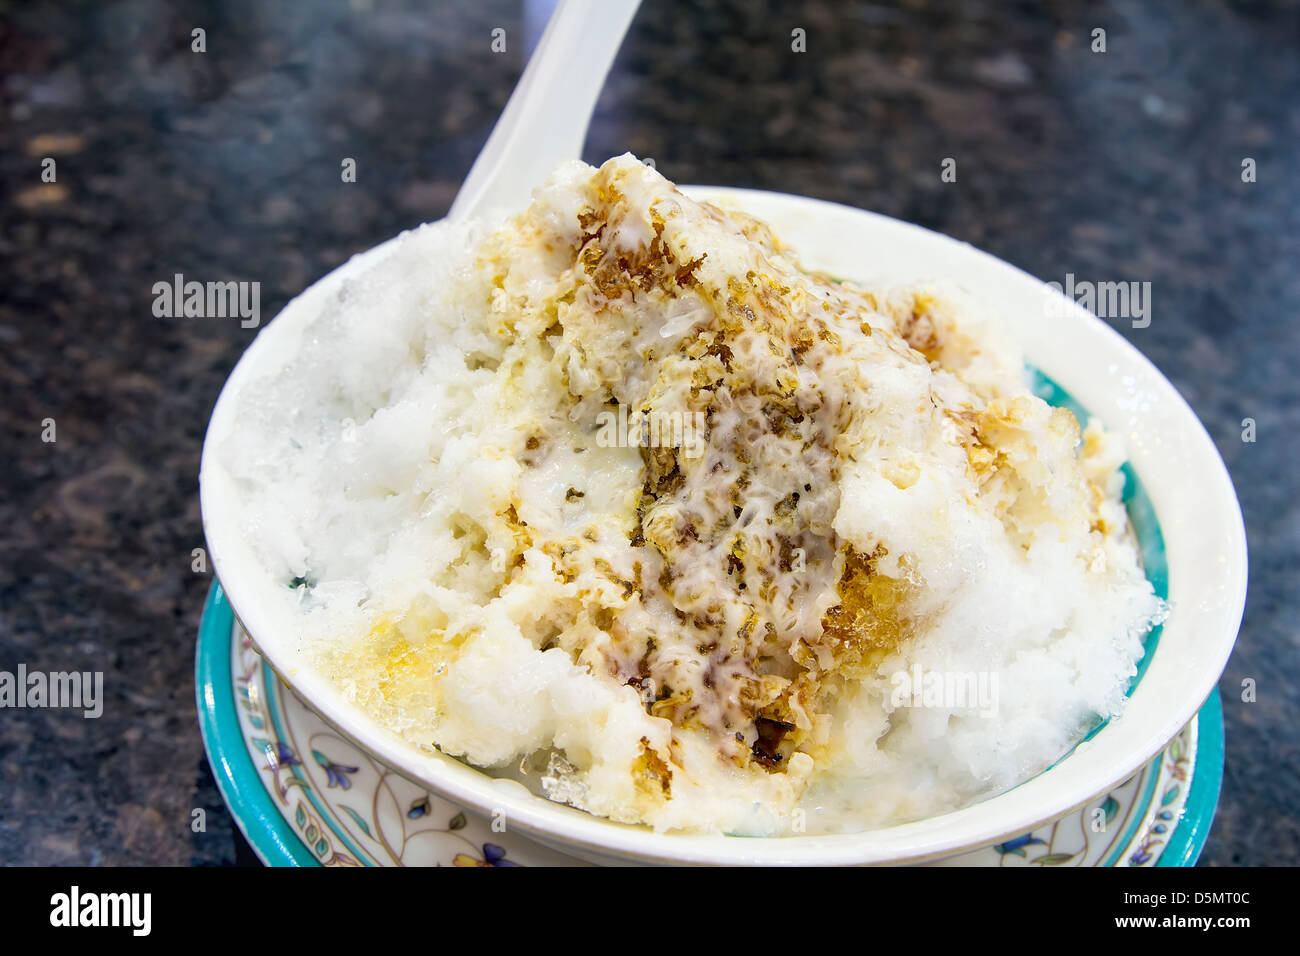 Cendol Shaved Ice Dessert with Gula Melaka Sugar Syrup and Coconut Milk Stock Photo